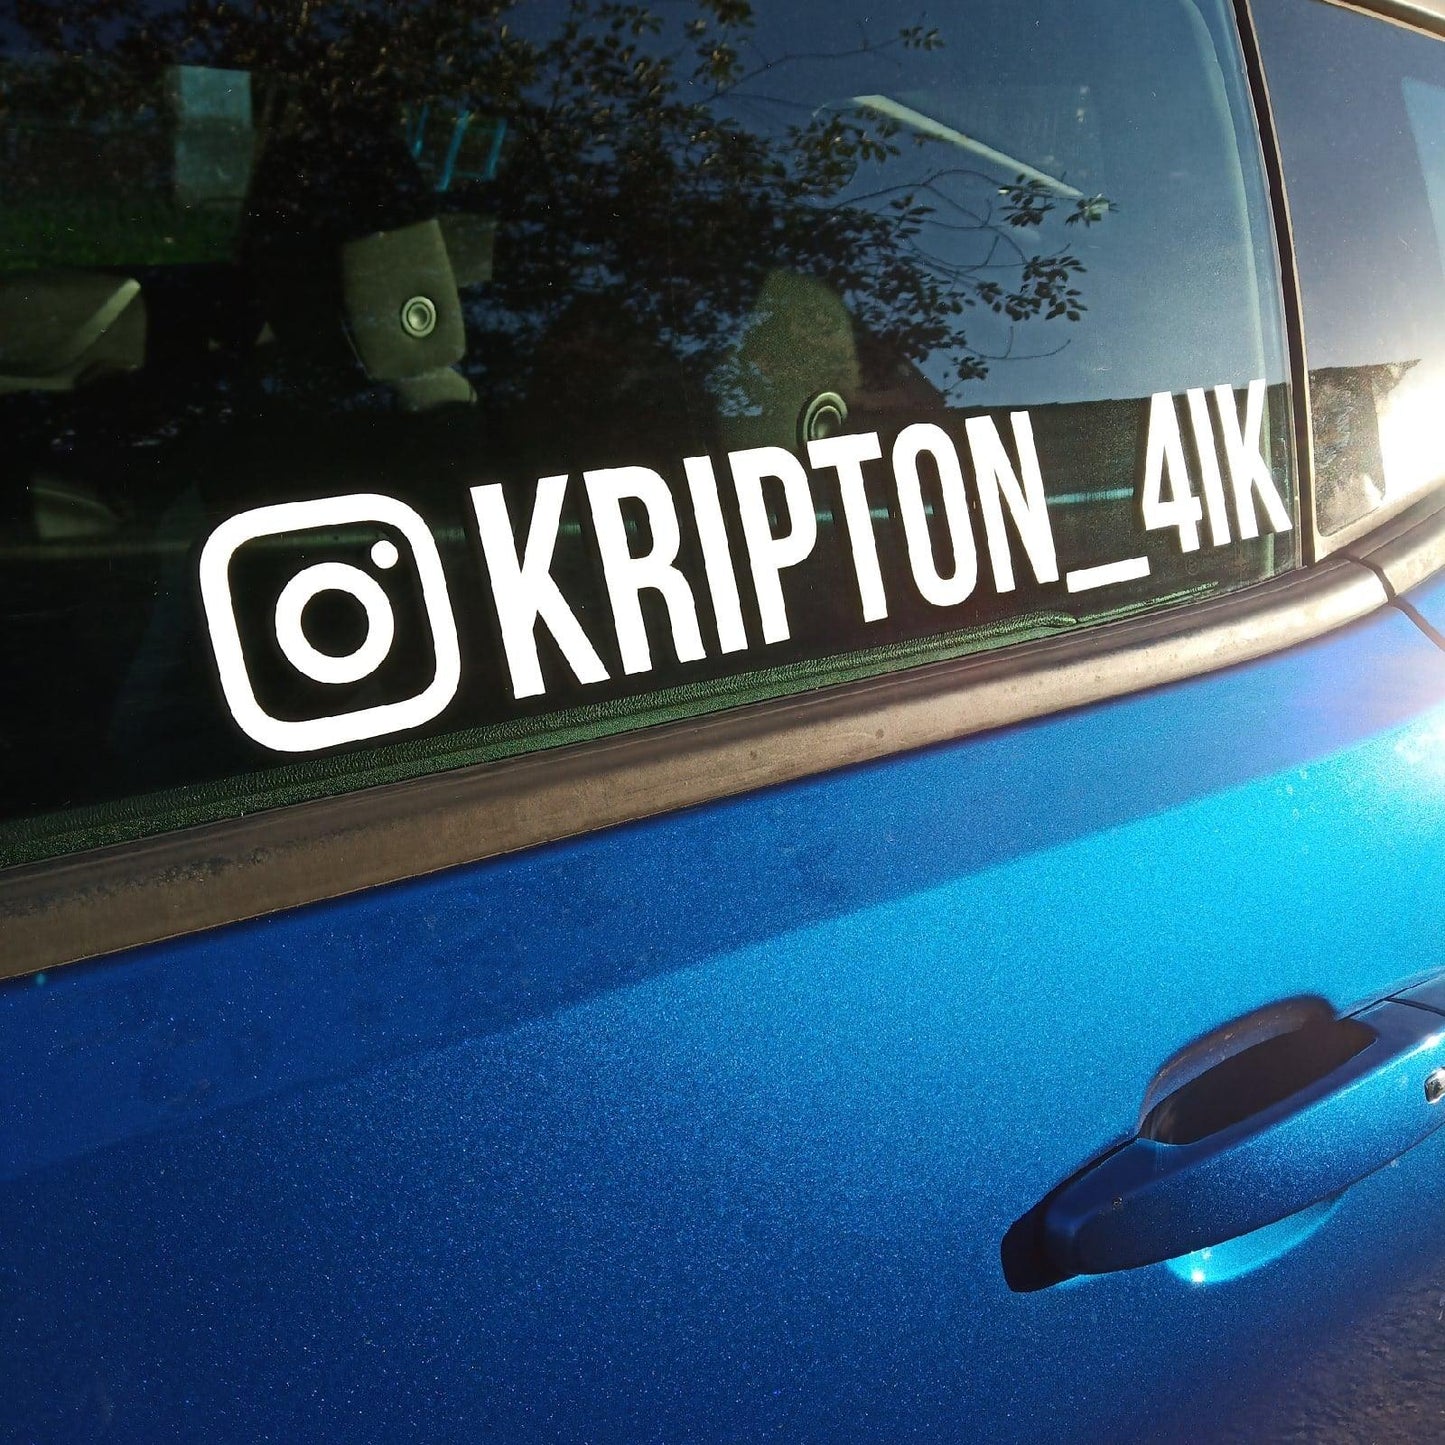 instagram nickname social media username car sticker glass decal